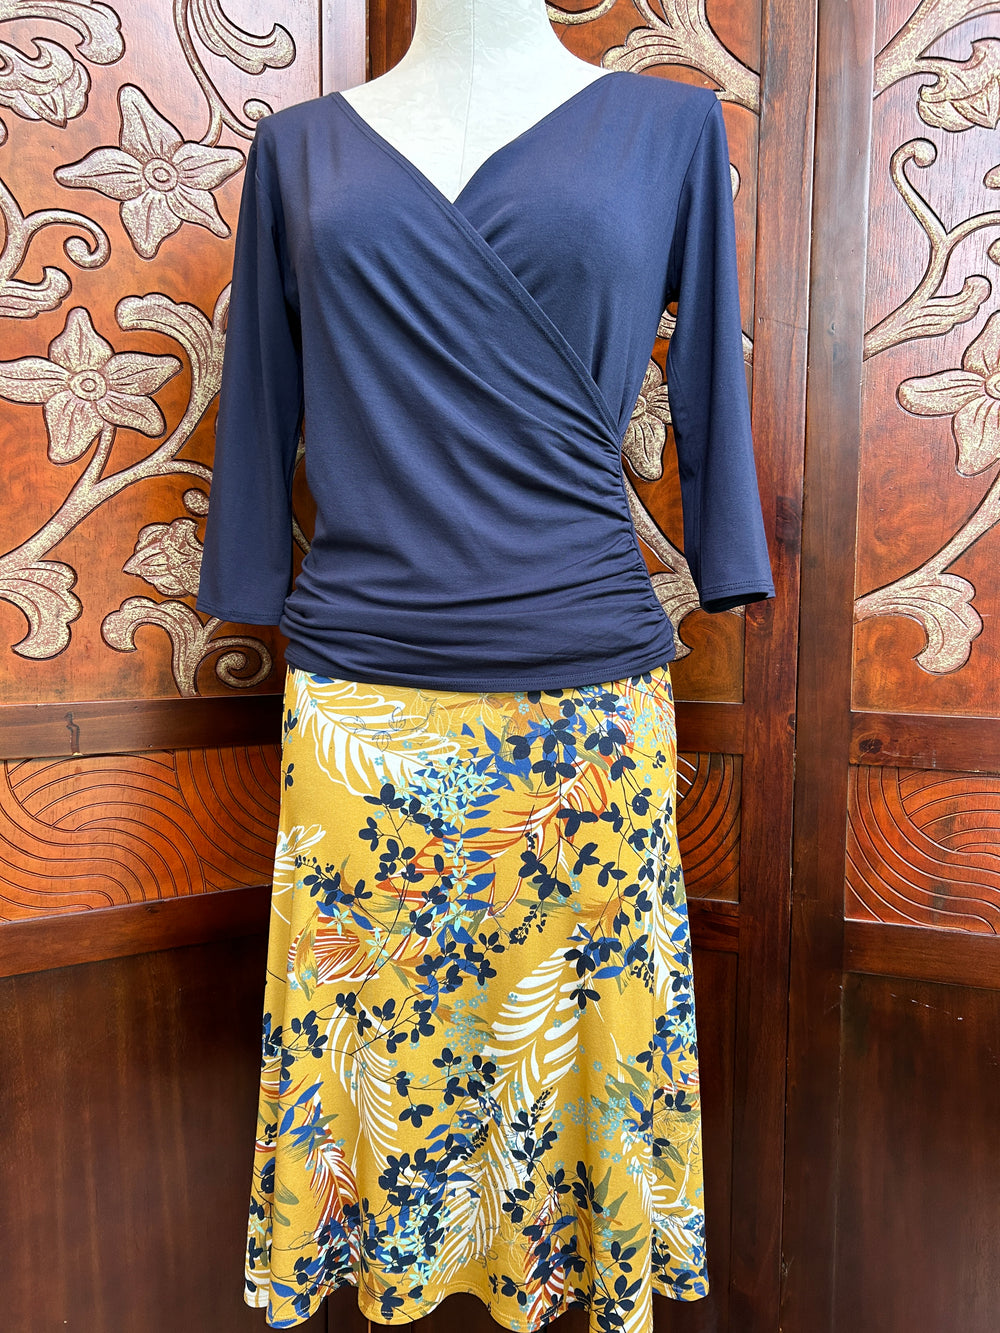 Salaam Angela skirt, gold floral print